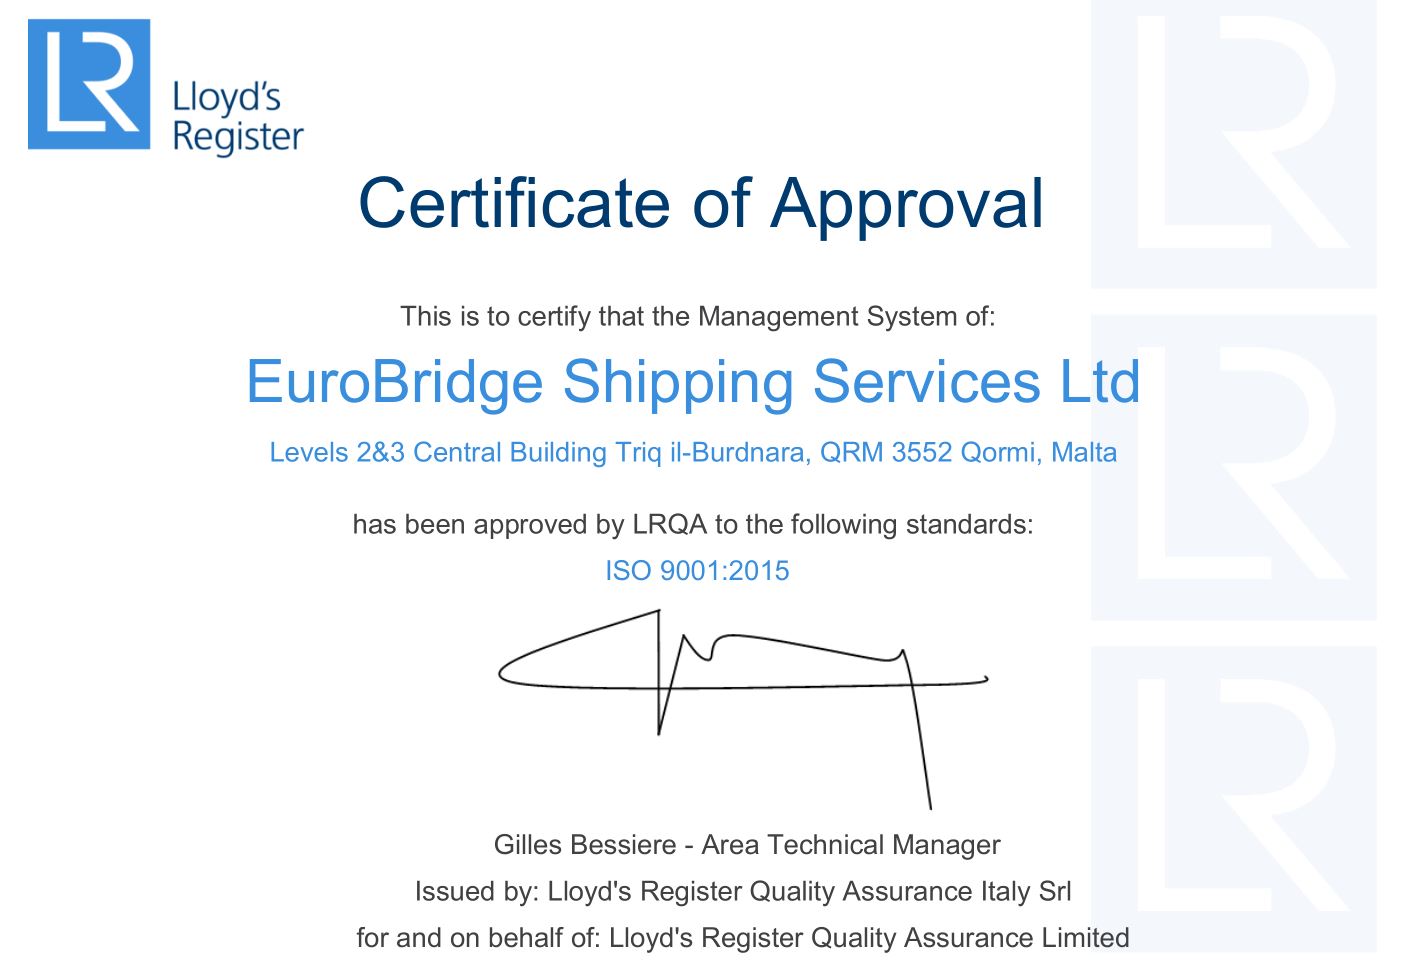 EuroBridge re-confirms ISO 9001 certification